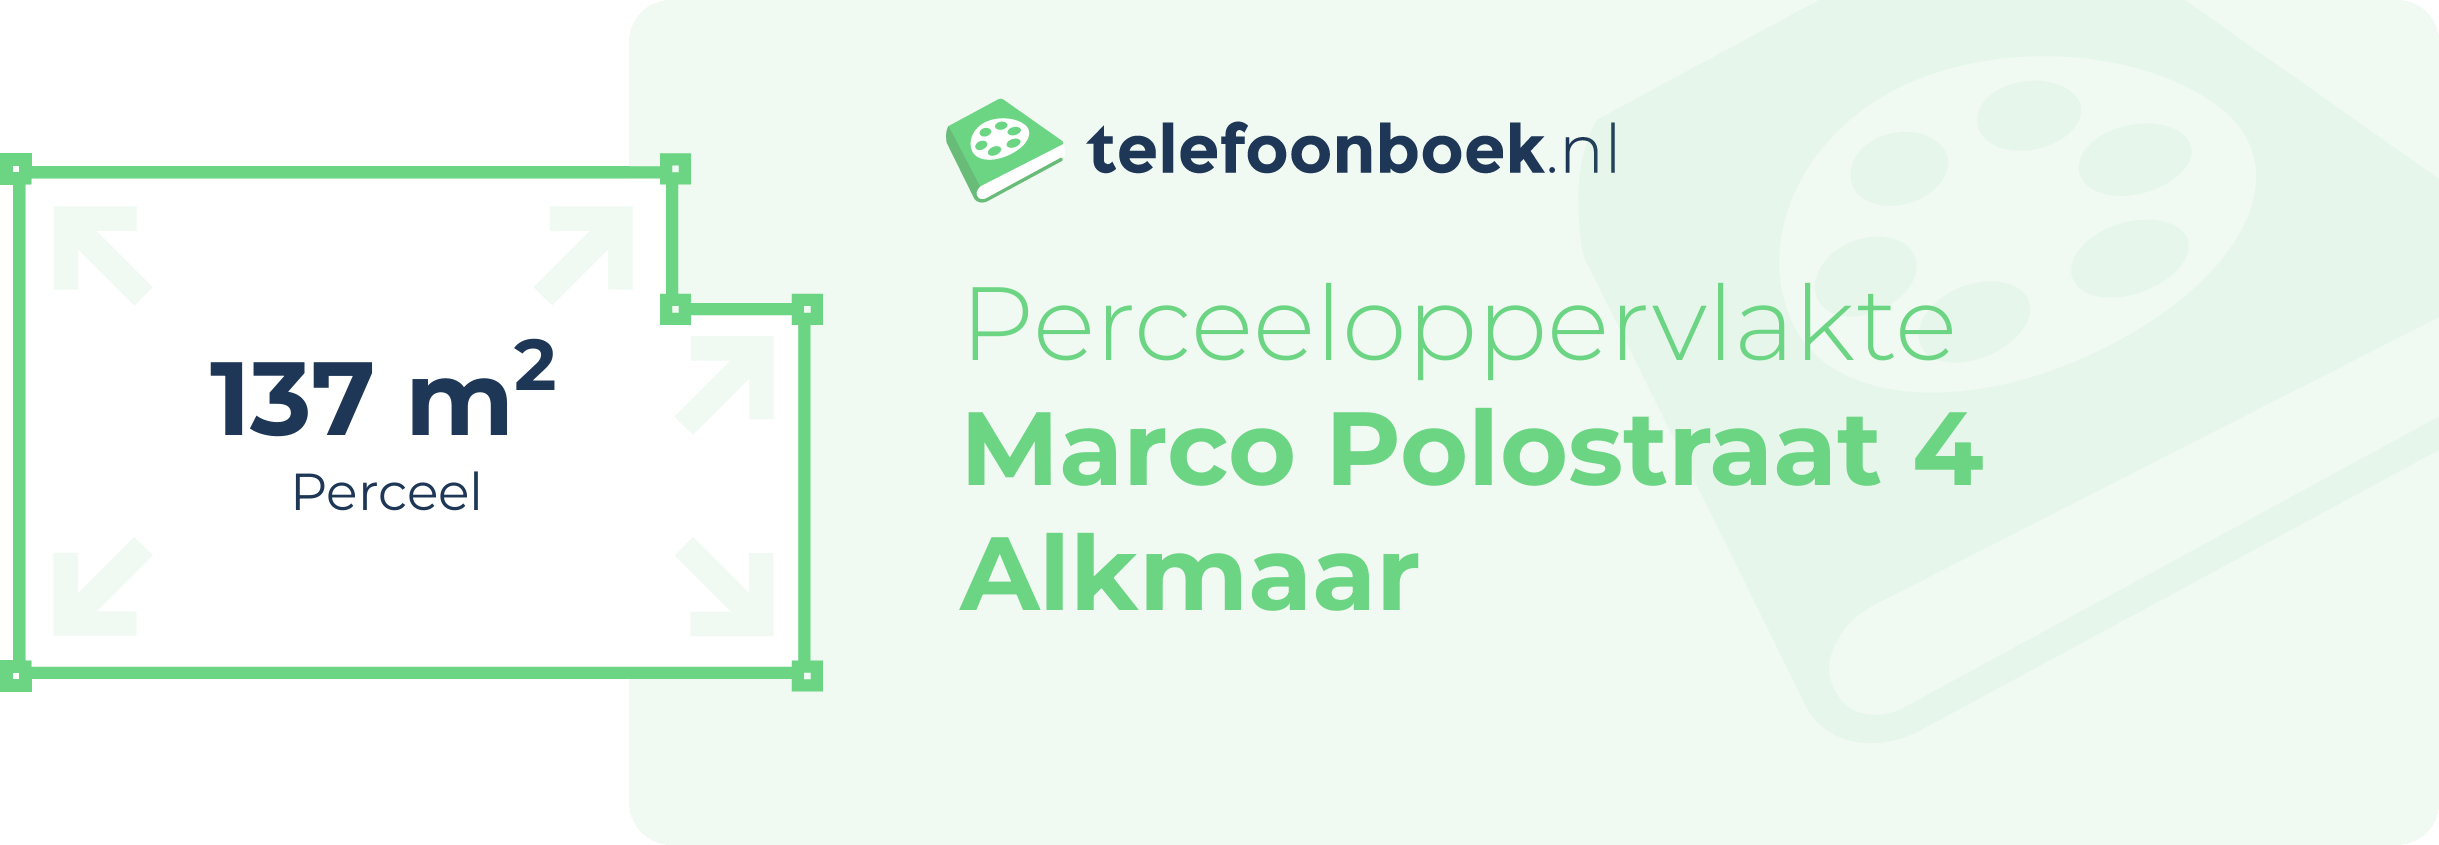 Perceeloppervlakte Marco Polostraat 4 Alkmaar